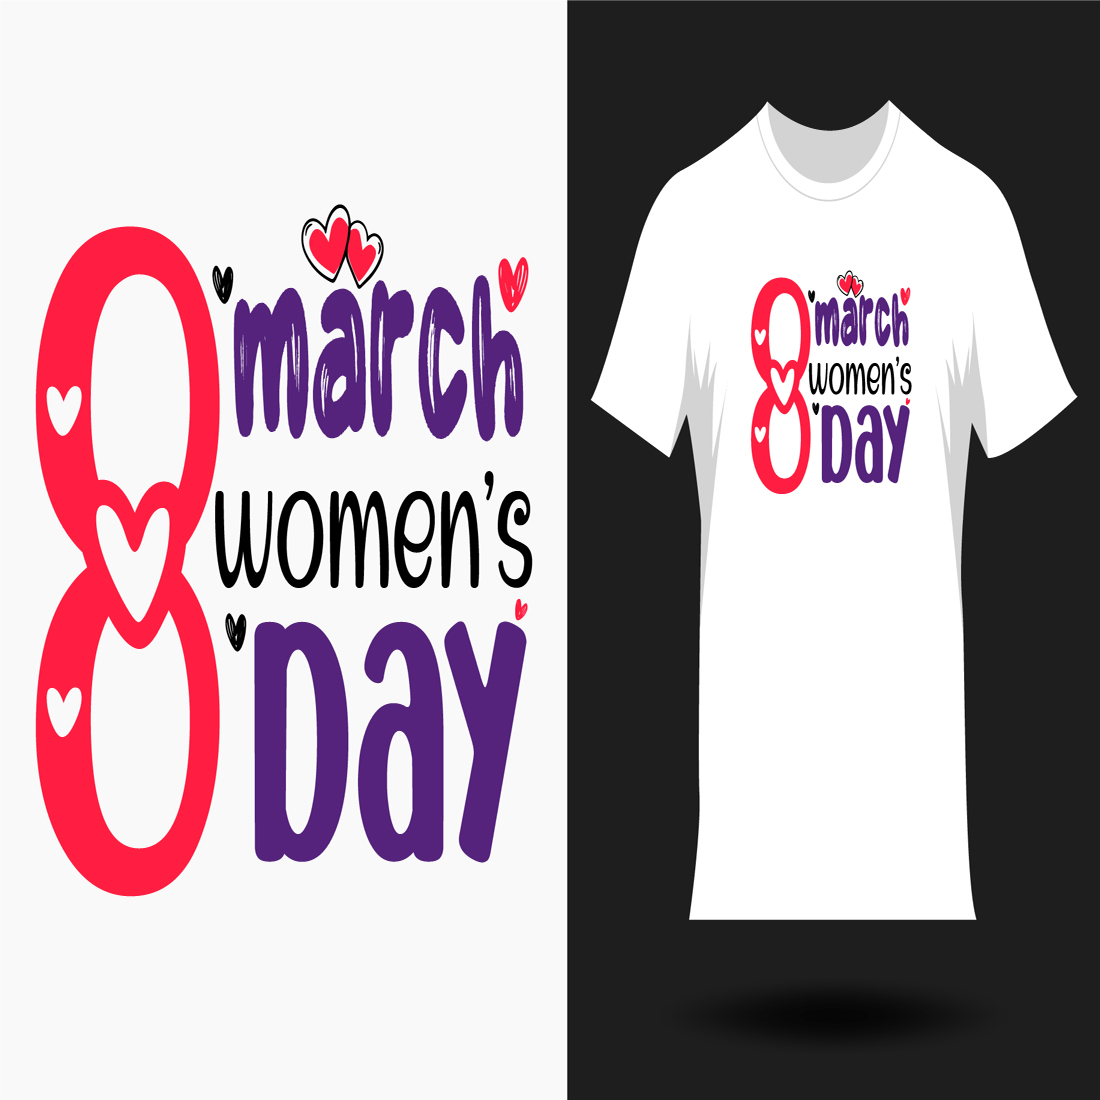 women s day t shirt design.jpg 1 447